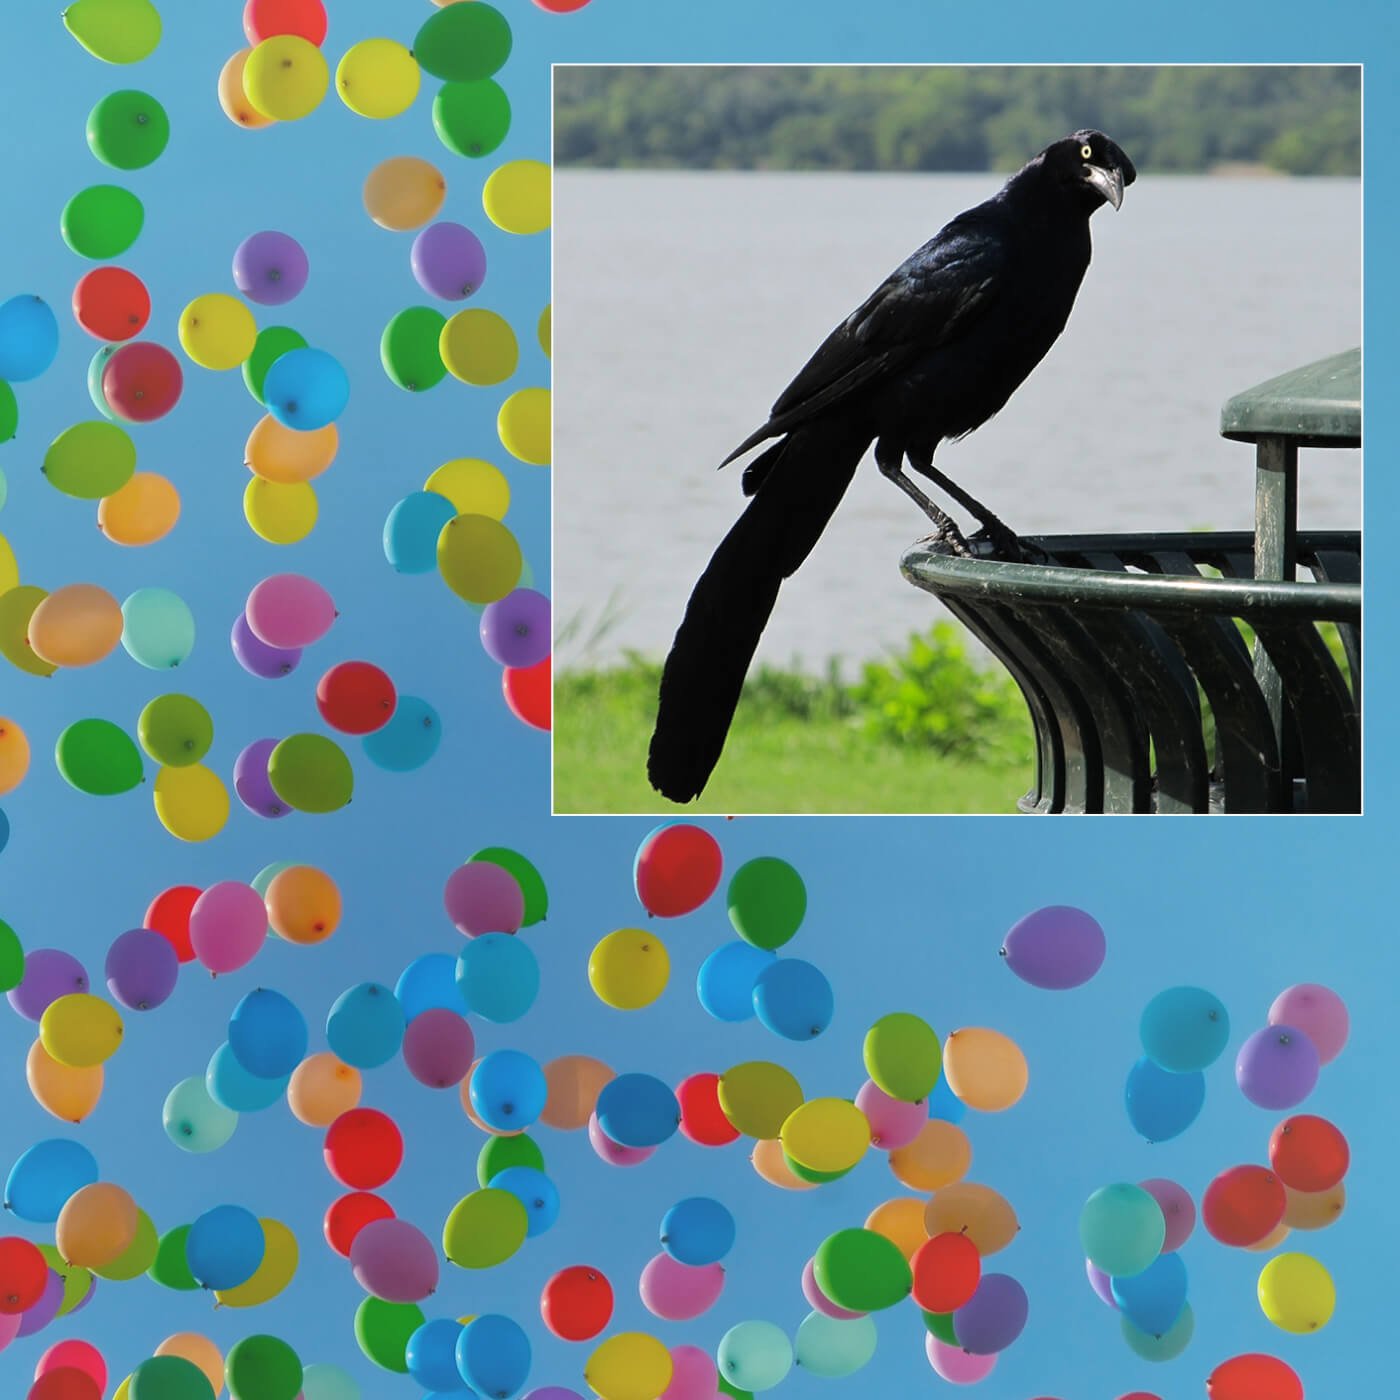 https://www.peta.org/wp-content/uploads/2018/09/Balloons-and-Bird-on-Trash.jpg